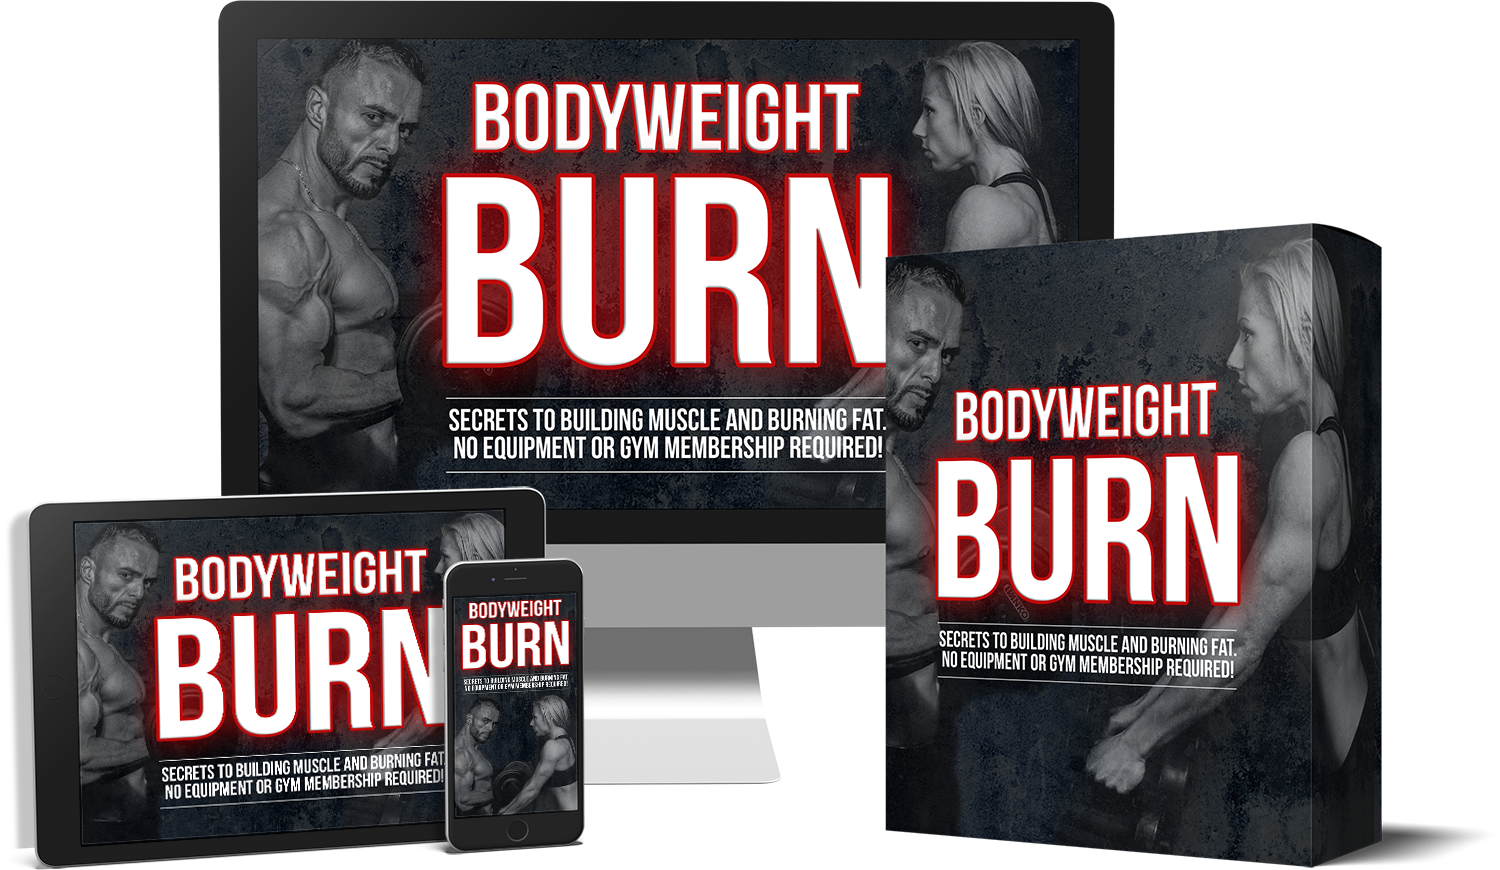 Bodyweight Burn - SEVENS Cardio Stack Workouts